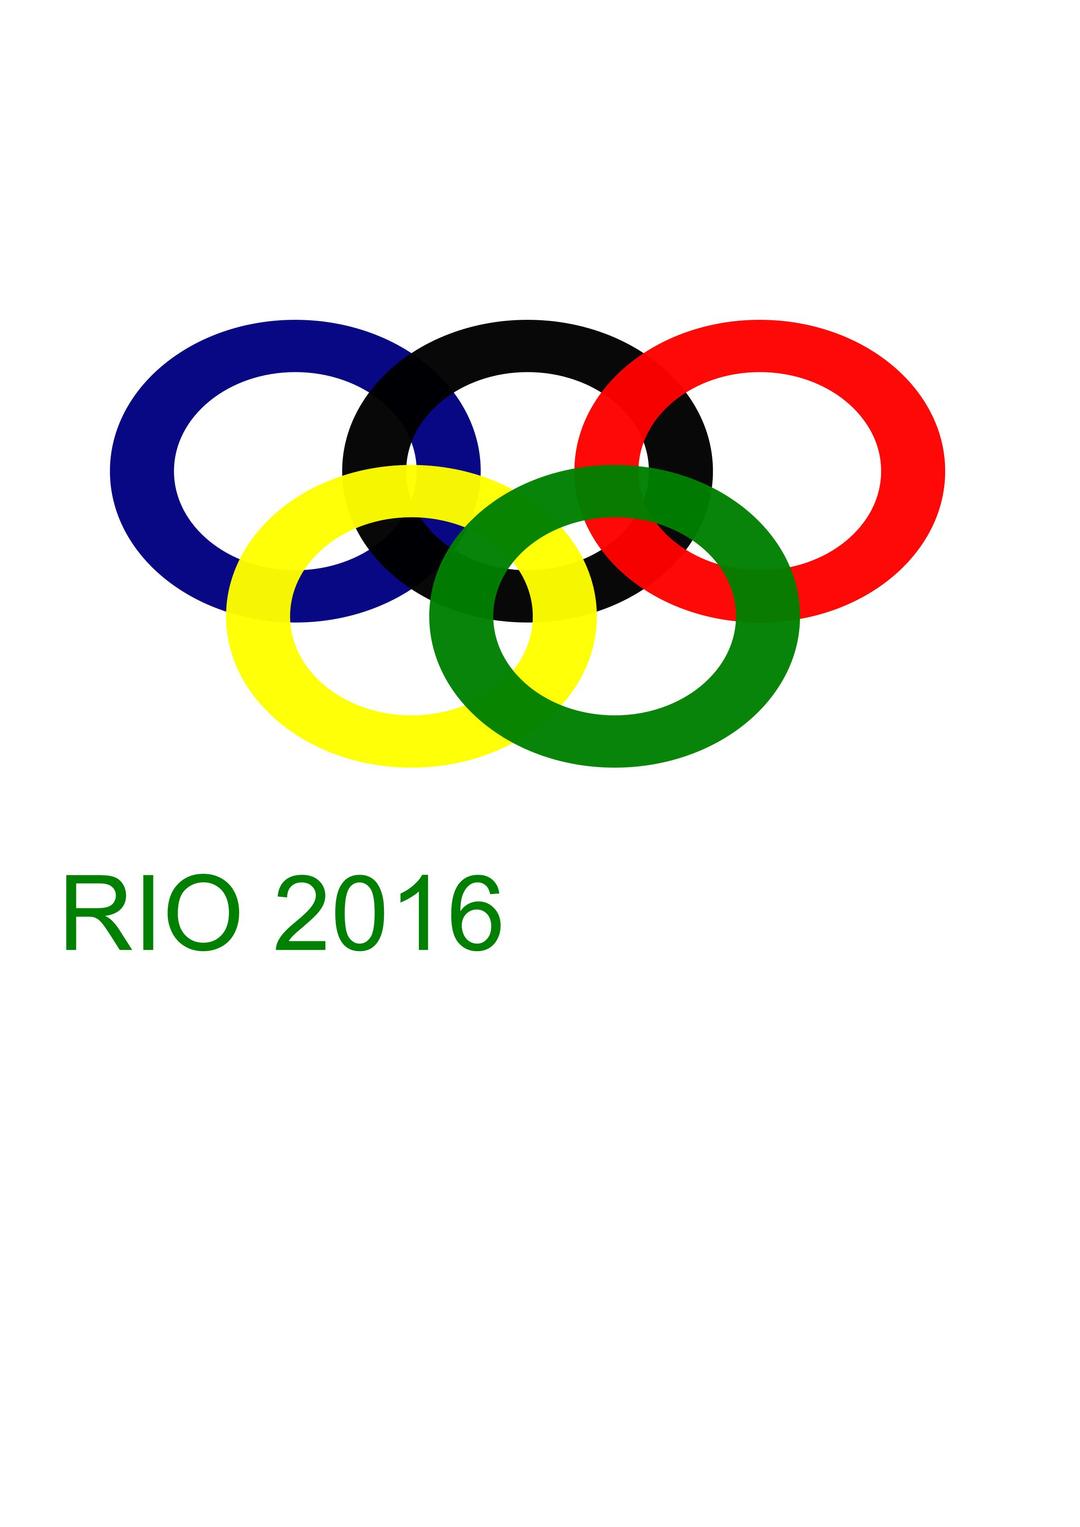 Juegos olimpicos RIO 2016 png transparent